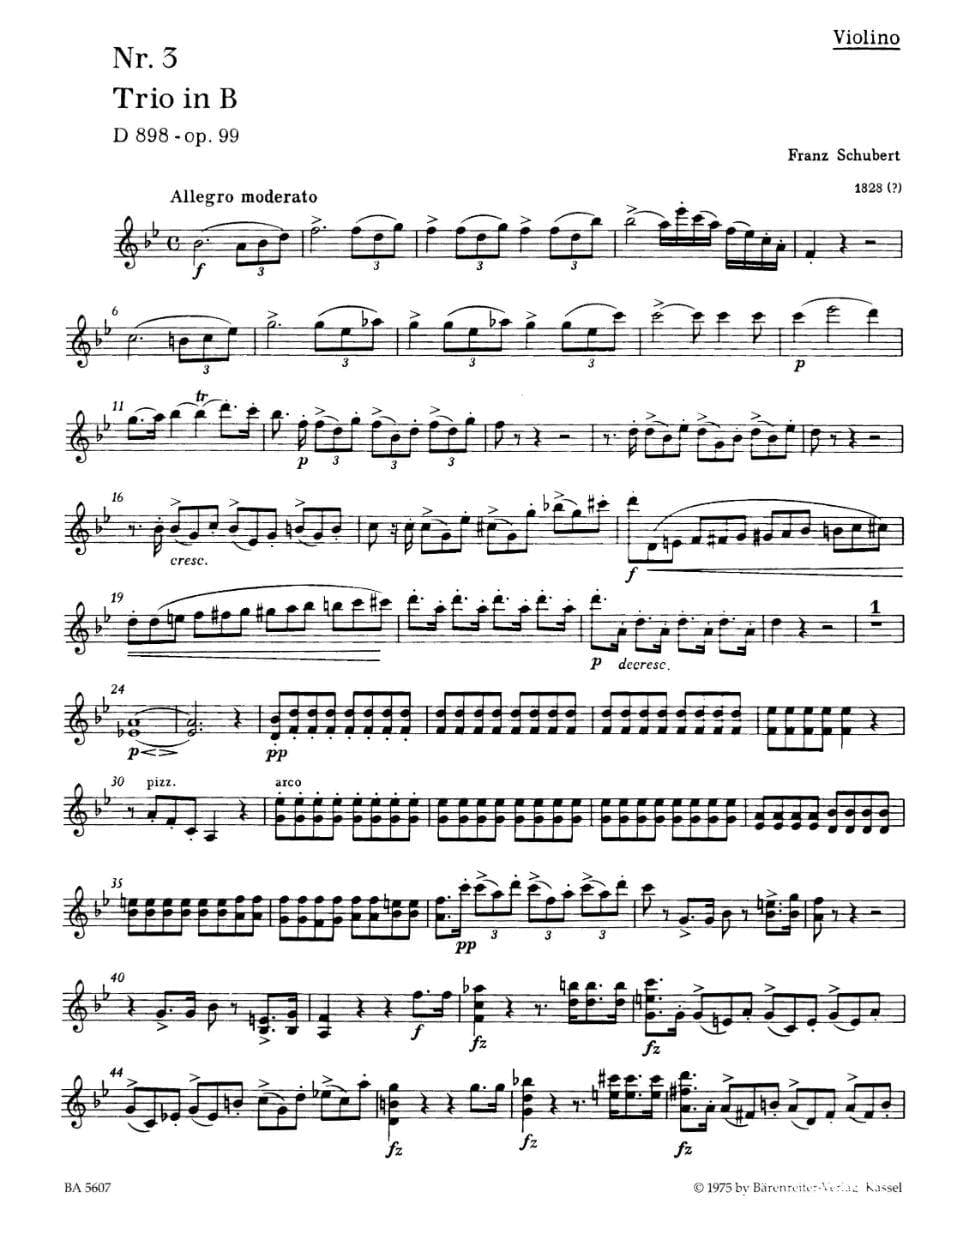 Schubert, Franz - Piano Trio No 1 in B-flat, Op 99, D 898 URTEXT Published by Barenreiter